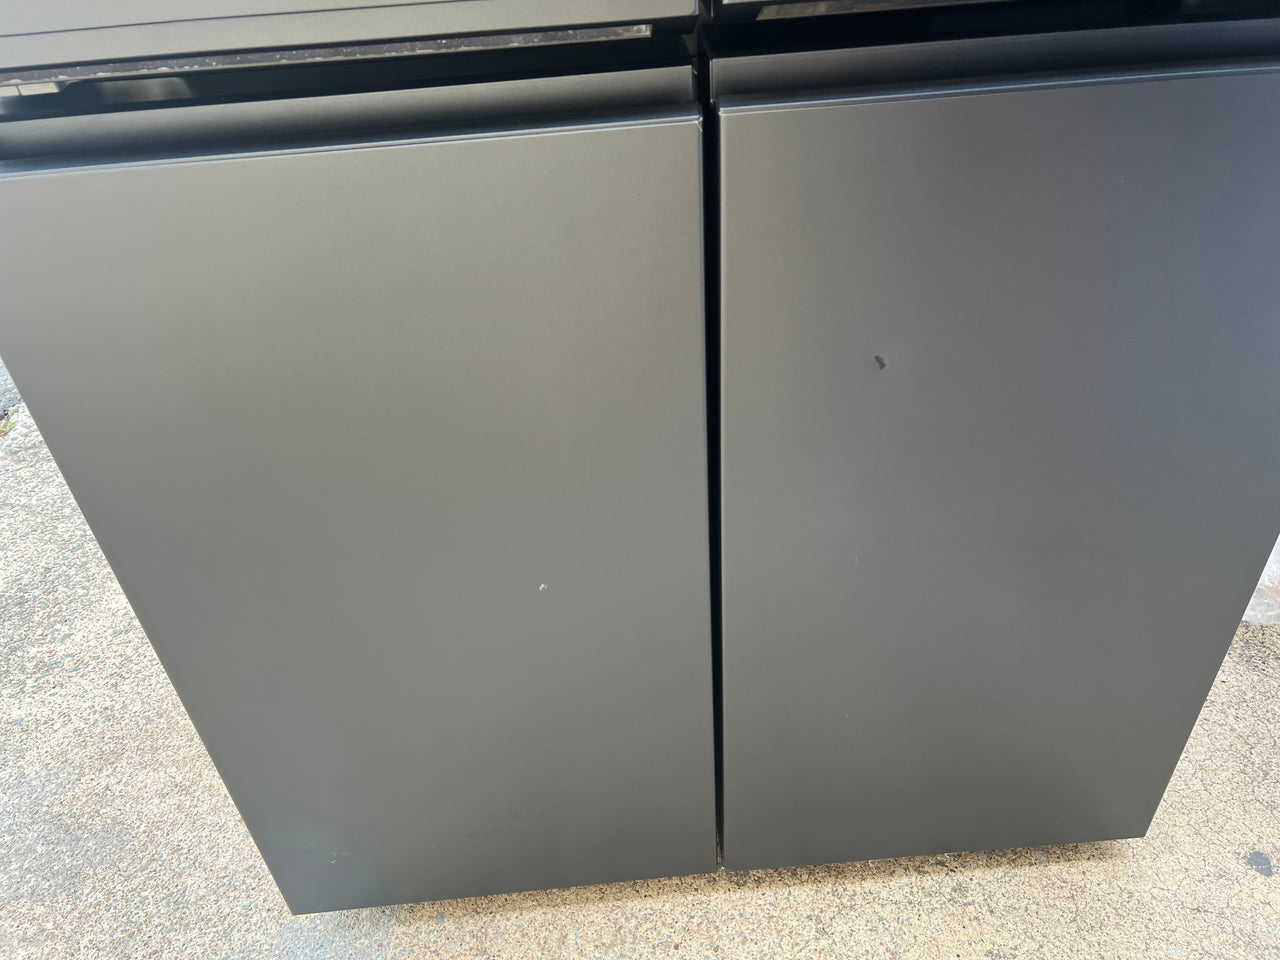 Carton damaged/Factory second Haier 623L Quad Door Refrigerator HRF680YPC with 4.5 star energy - Second Hand Appliances Geebung